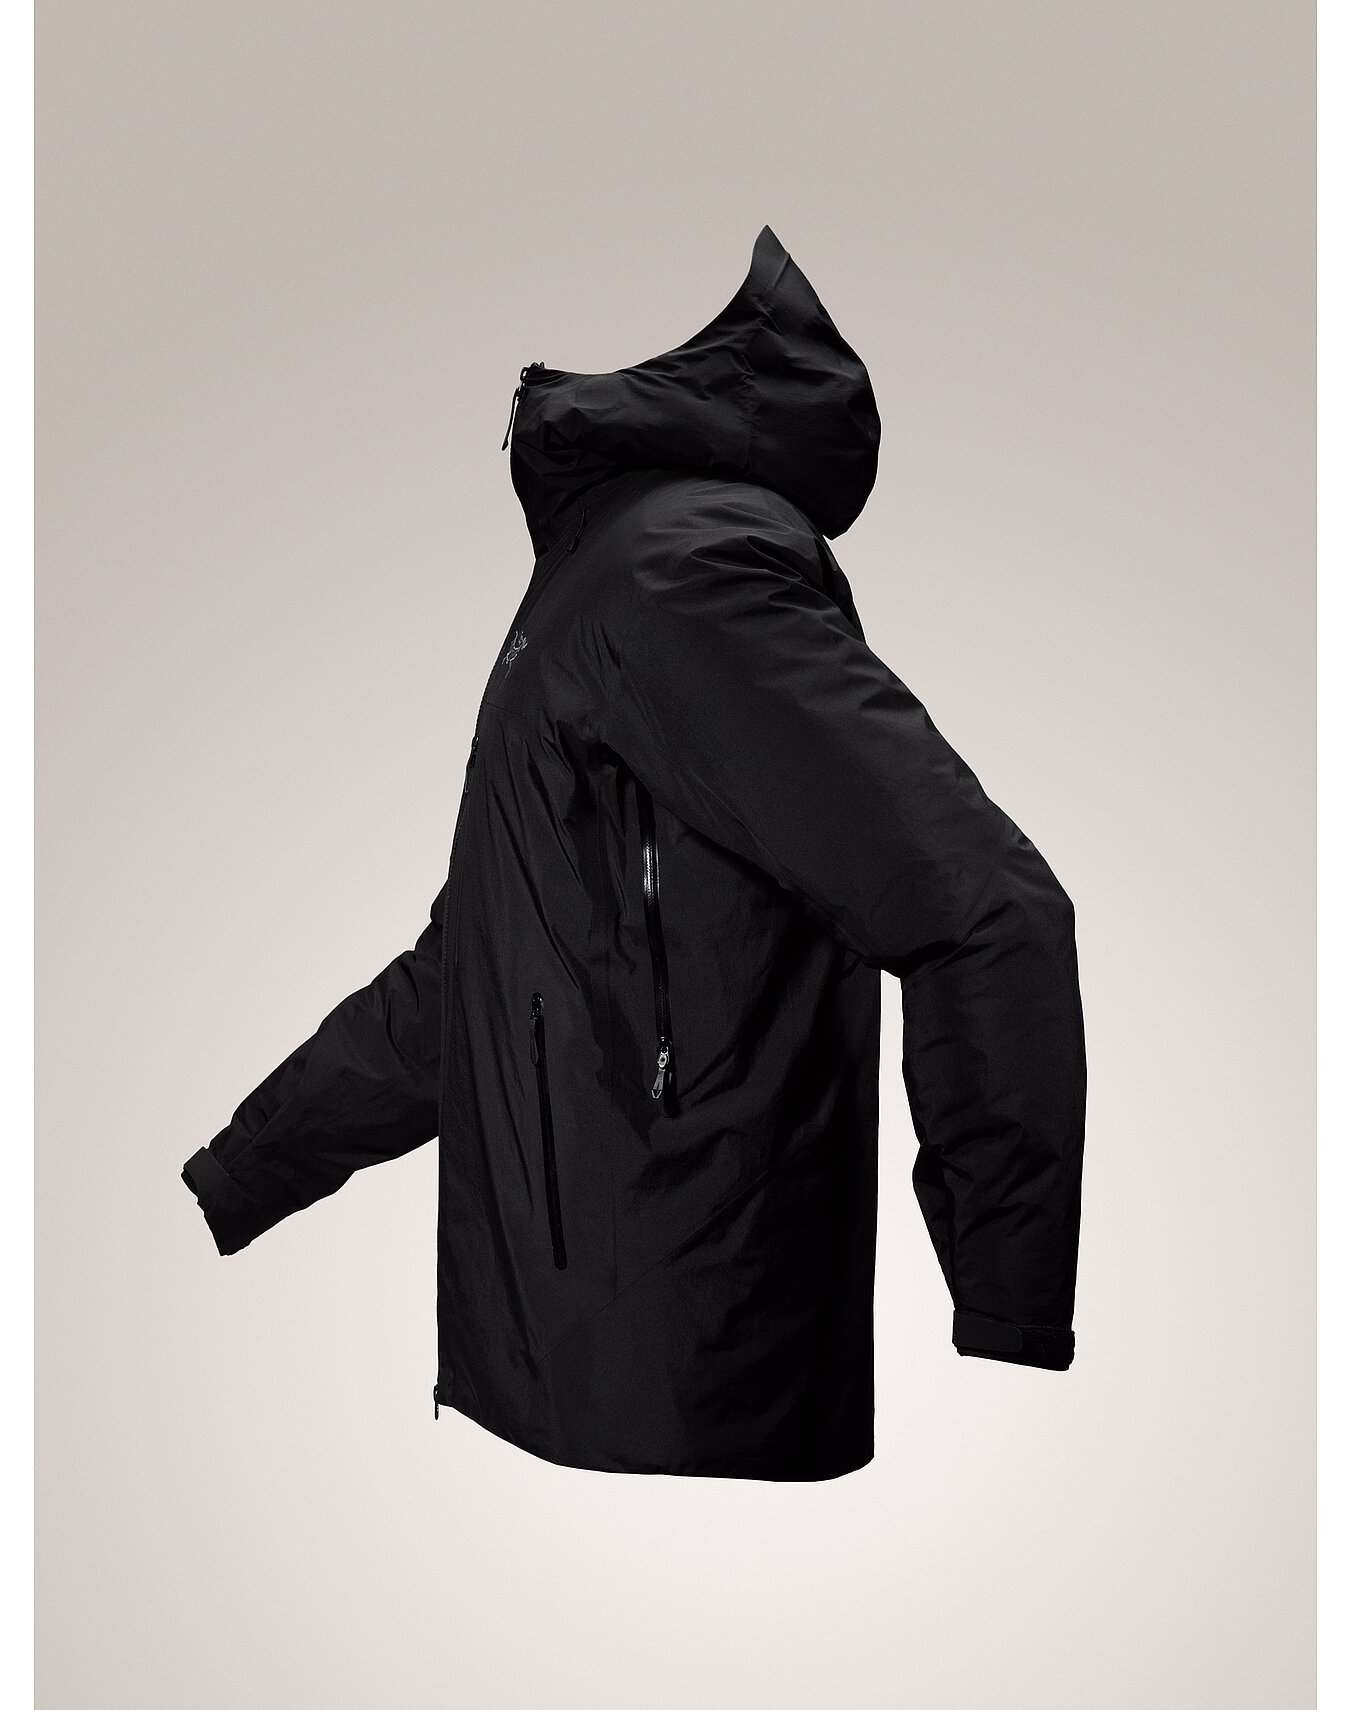 Beta Insulated Jacket Men's | Arc'teryx